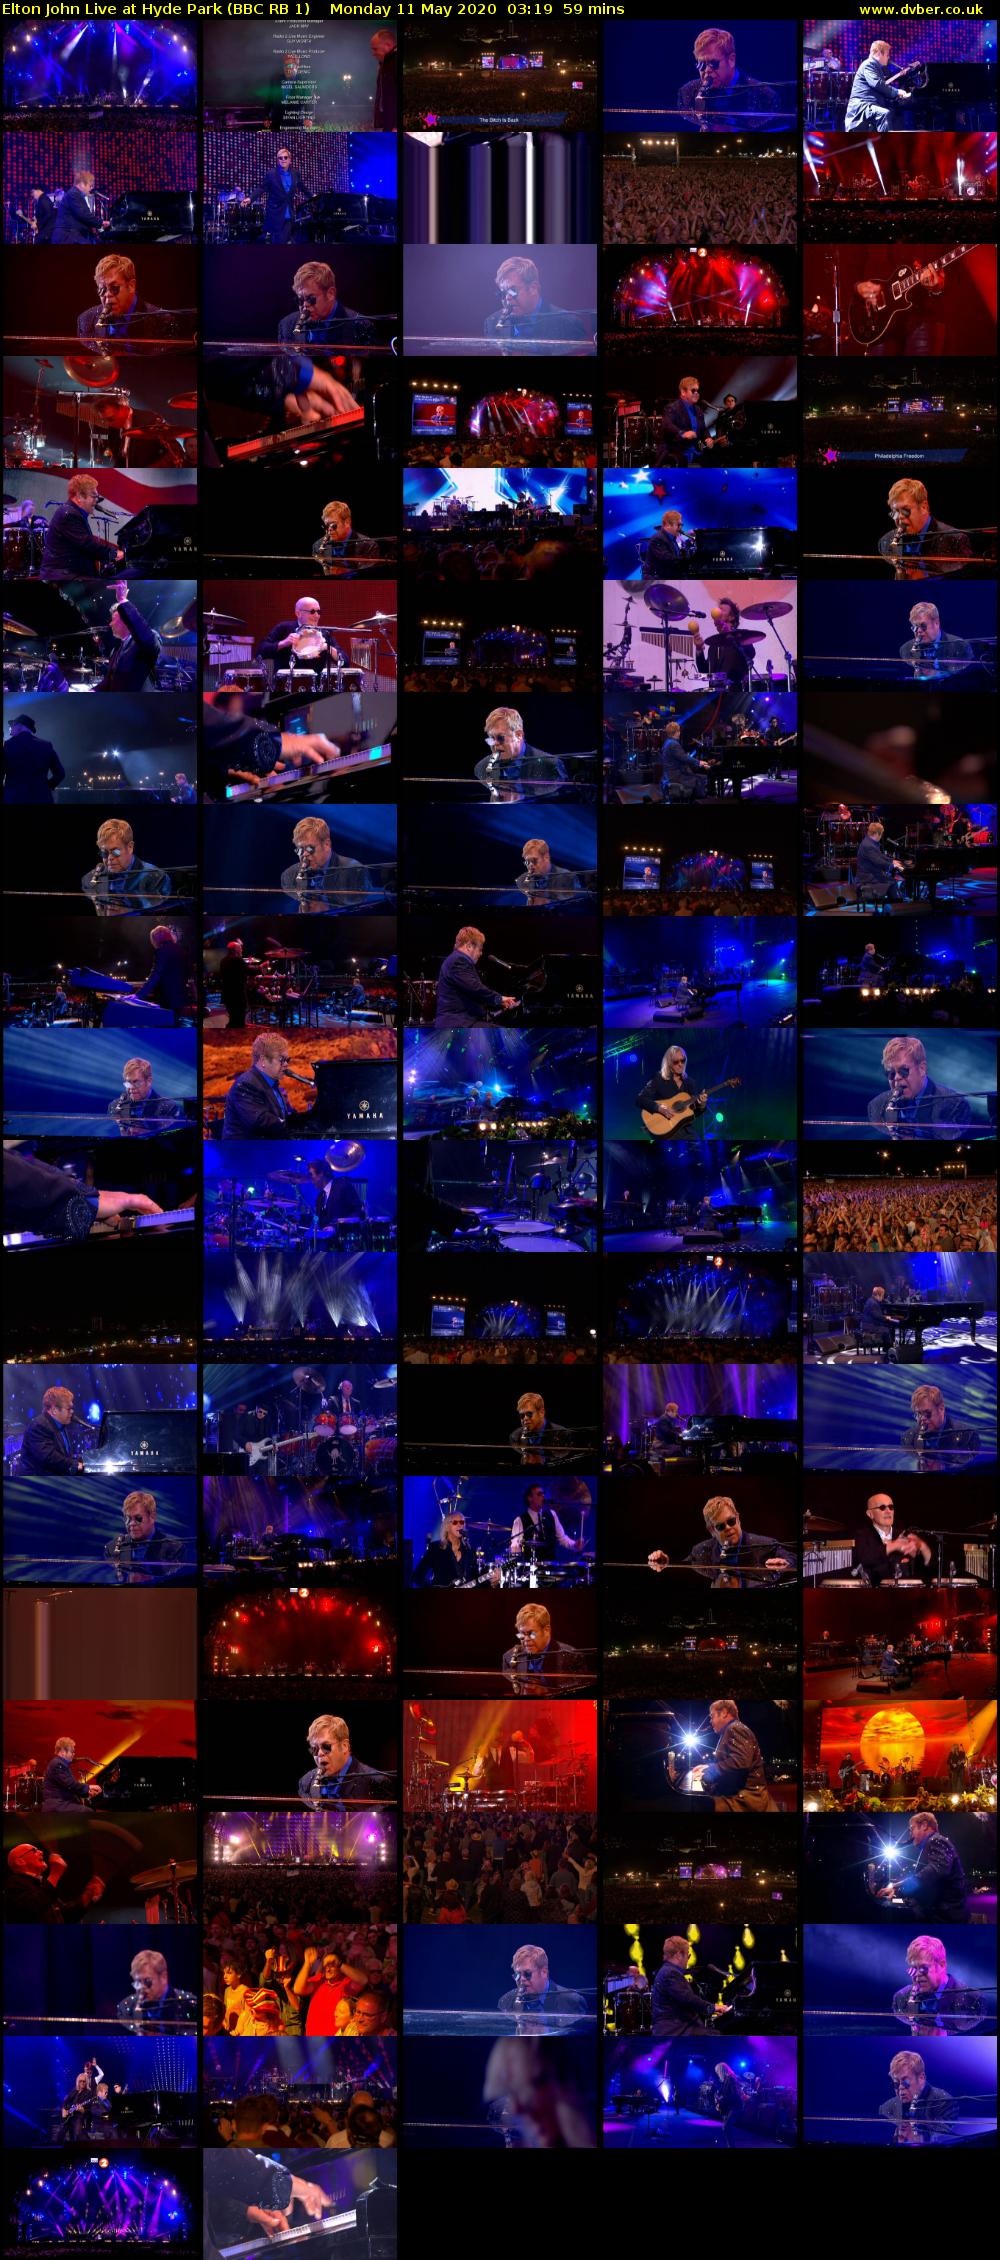 Elton John Live at Hyde Park (BBC RB 1) Monday 11 May 2020 03:19 - 04:18